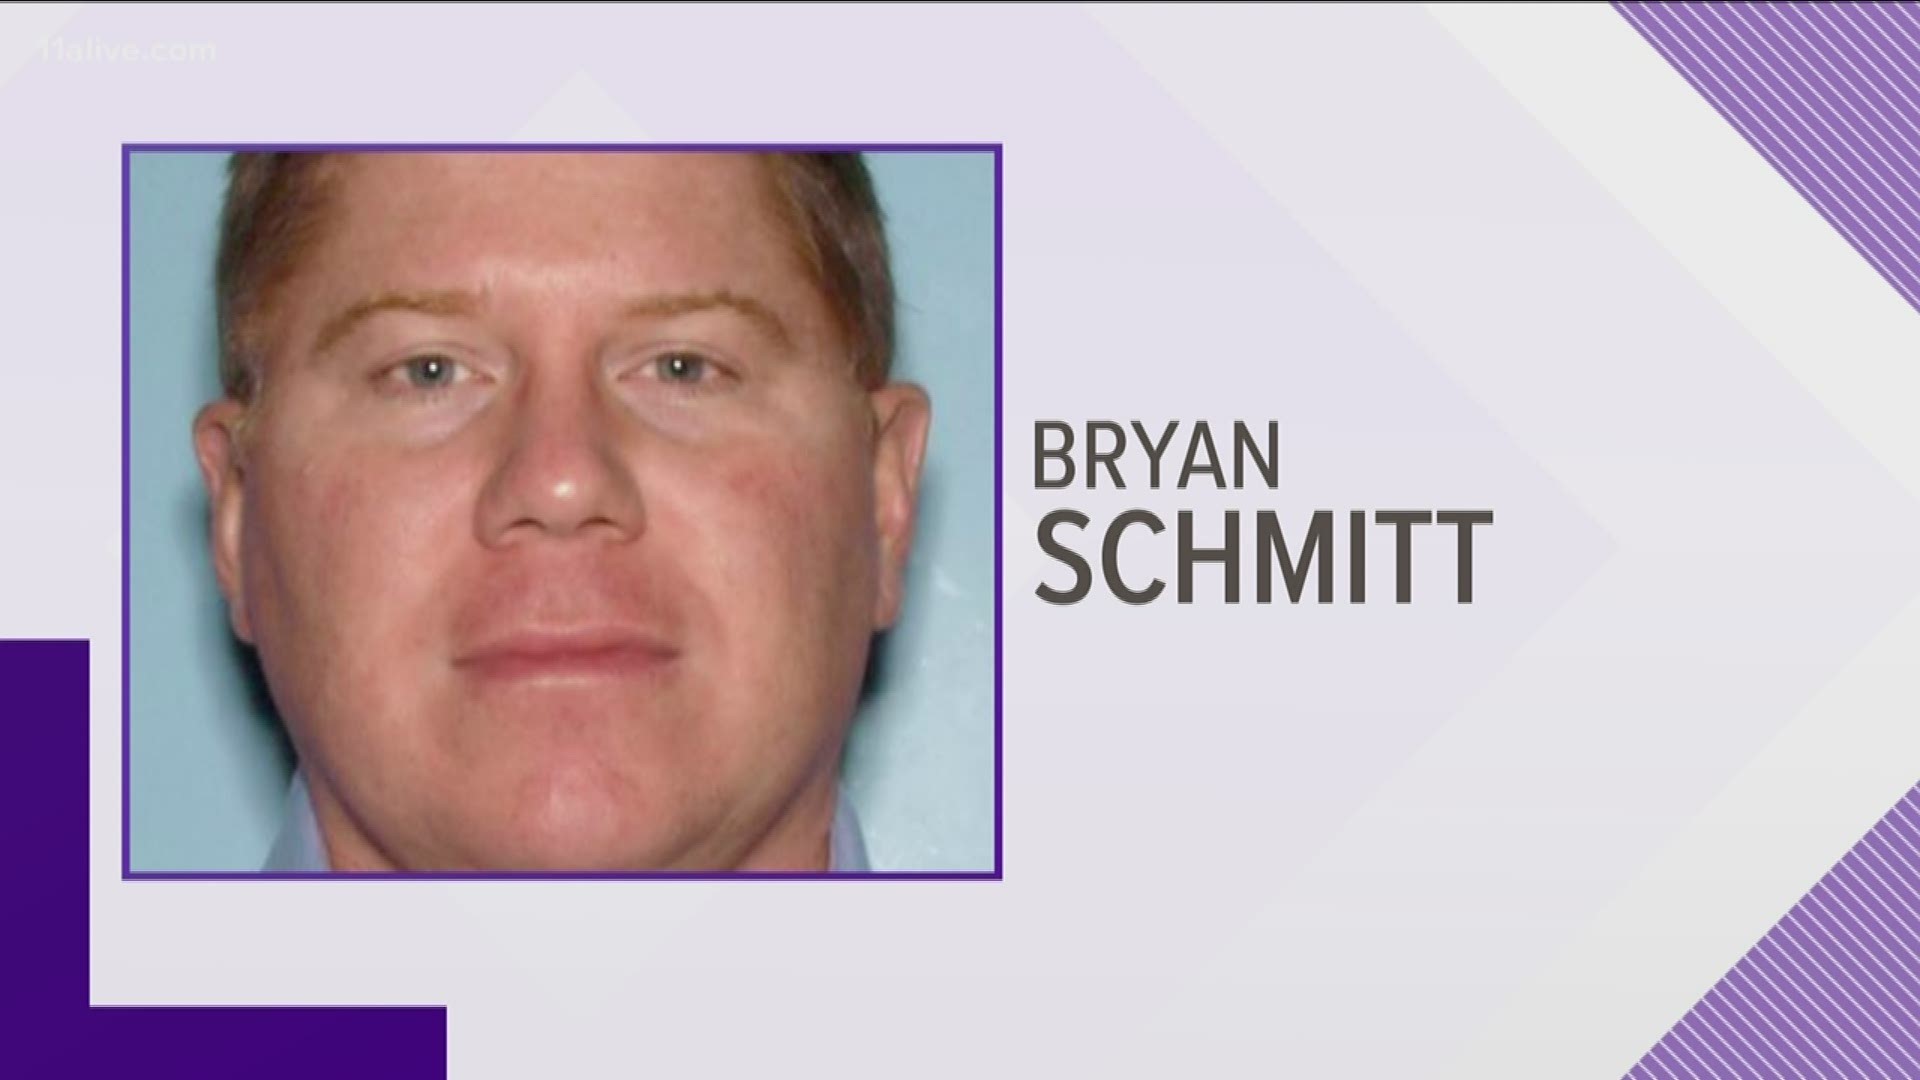 Police arrested Bryan Schmitt.